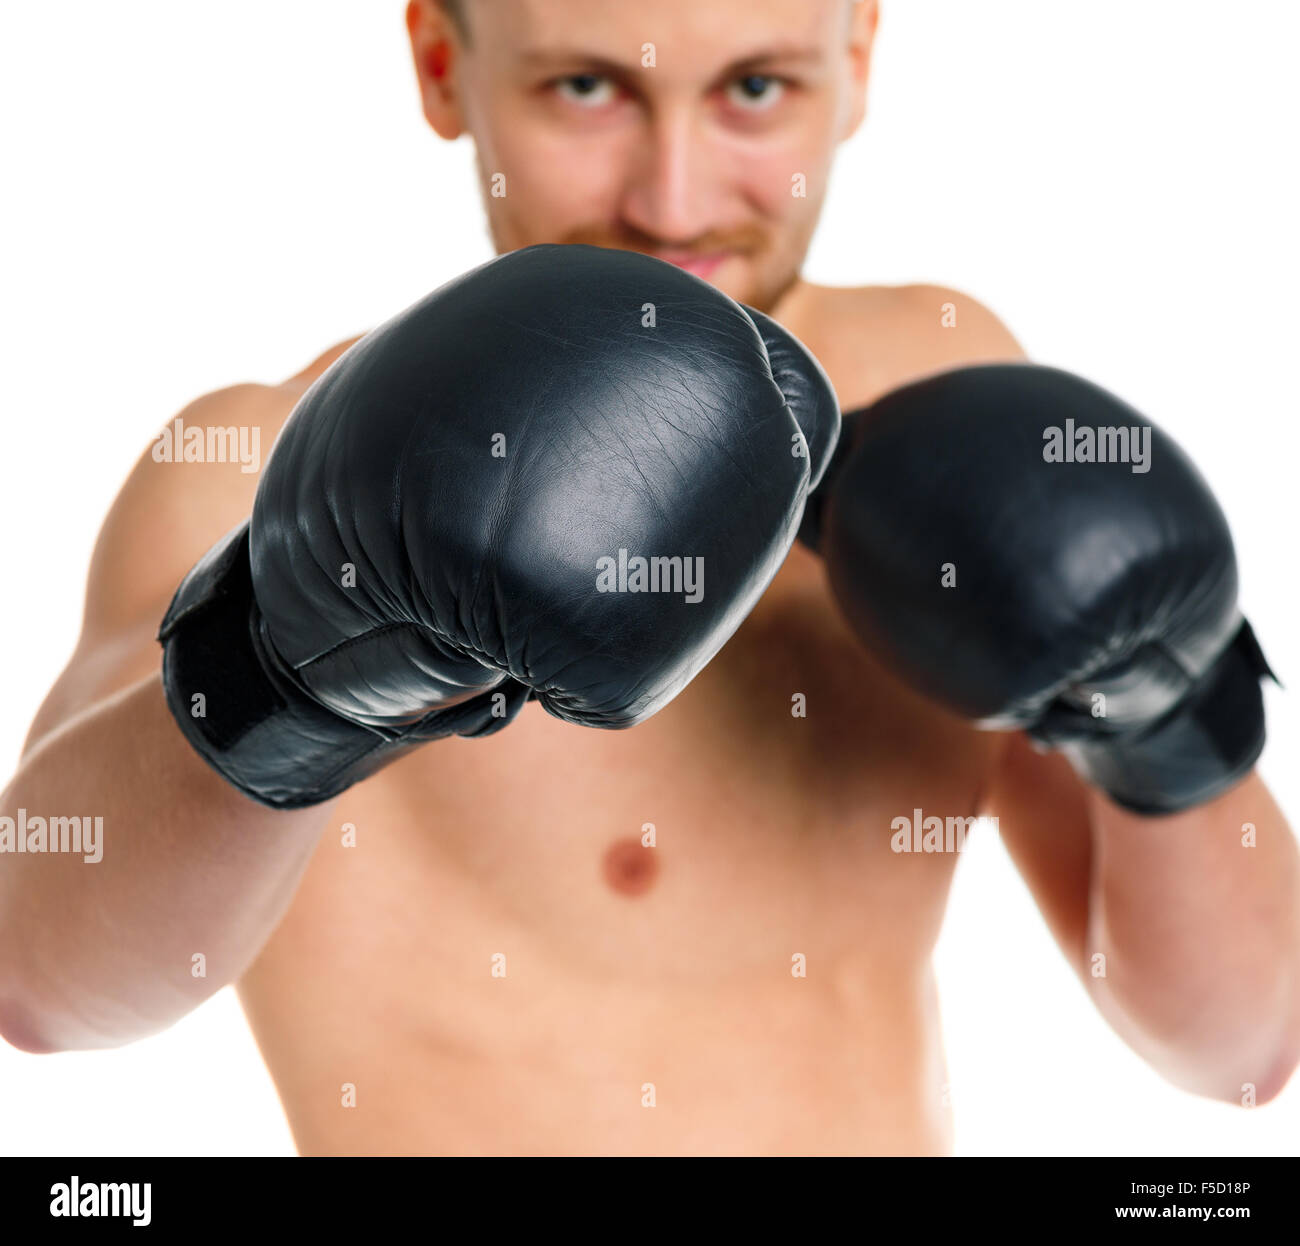 Hombre Brutal Del Boxeador En Guantes De Boxeo Foto de archivo - Imagen de  negro, cara: 78031976